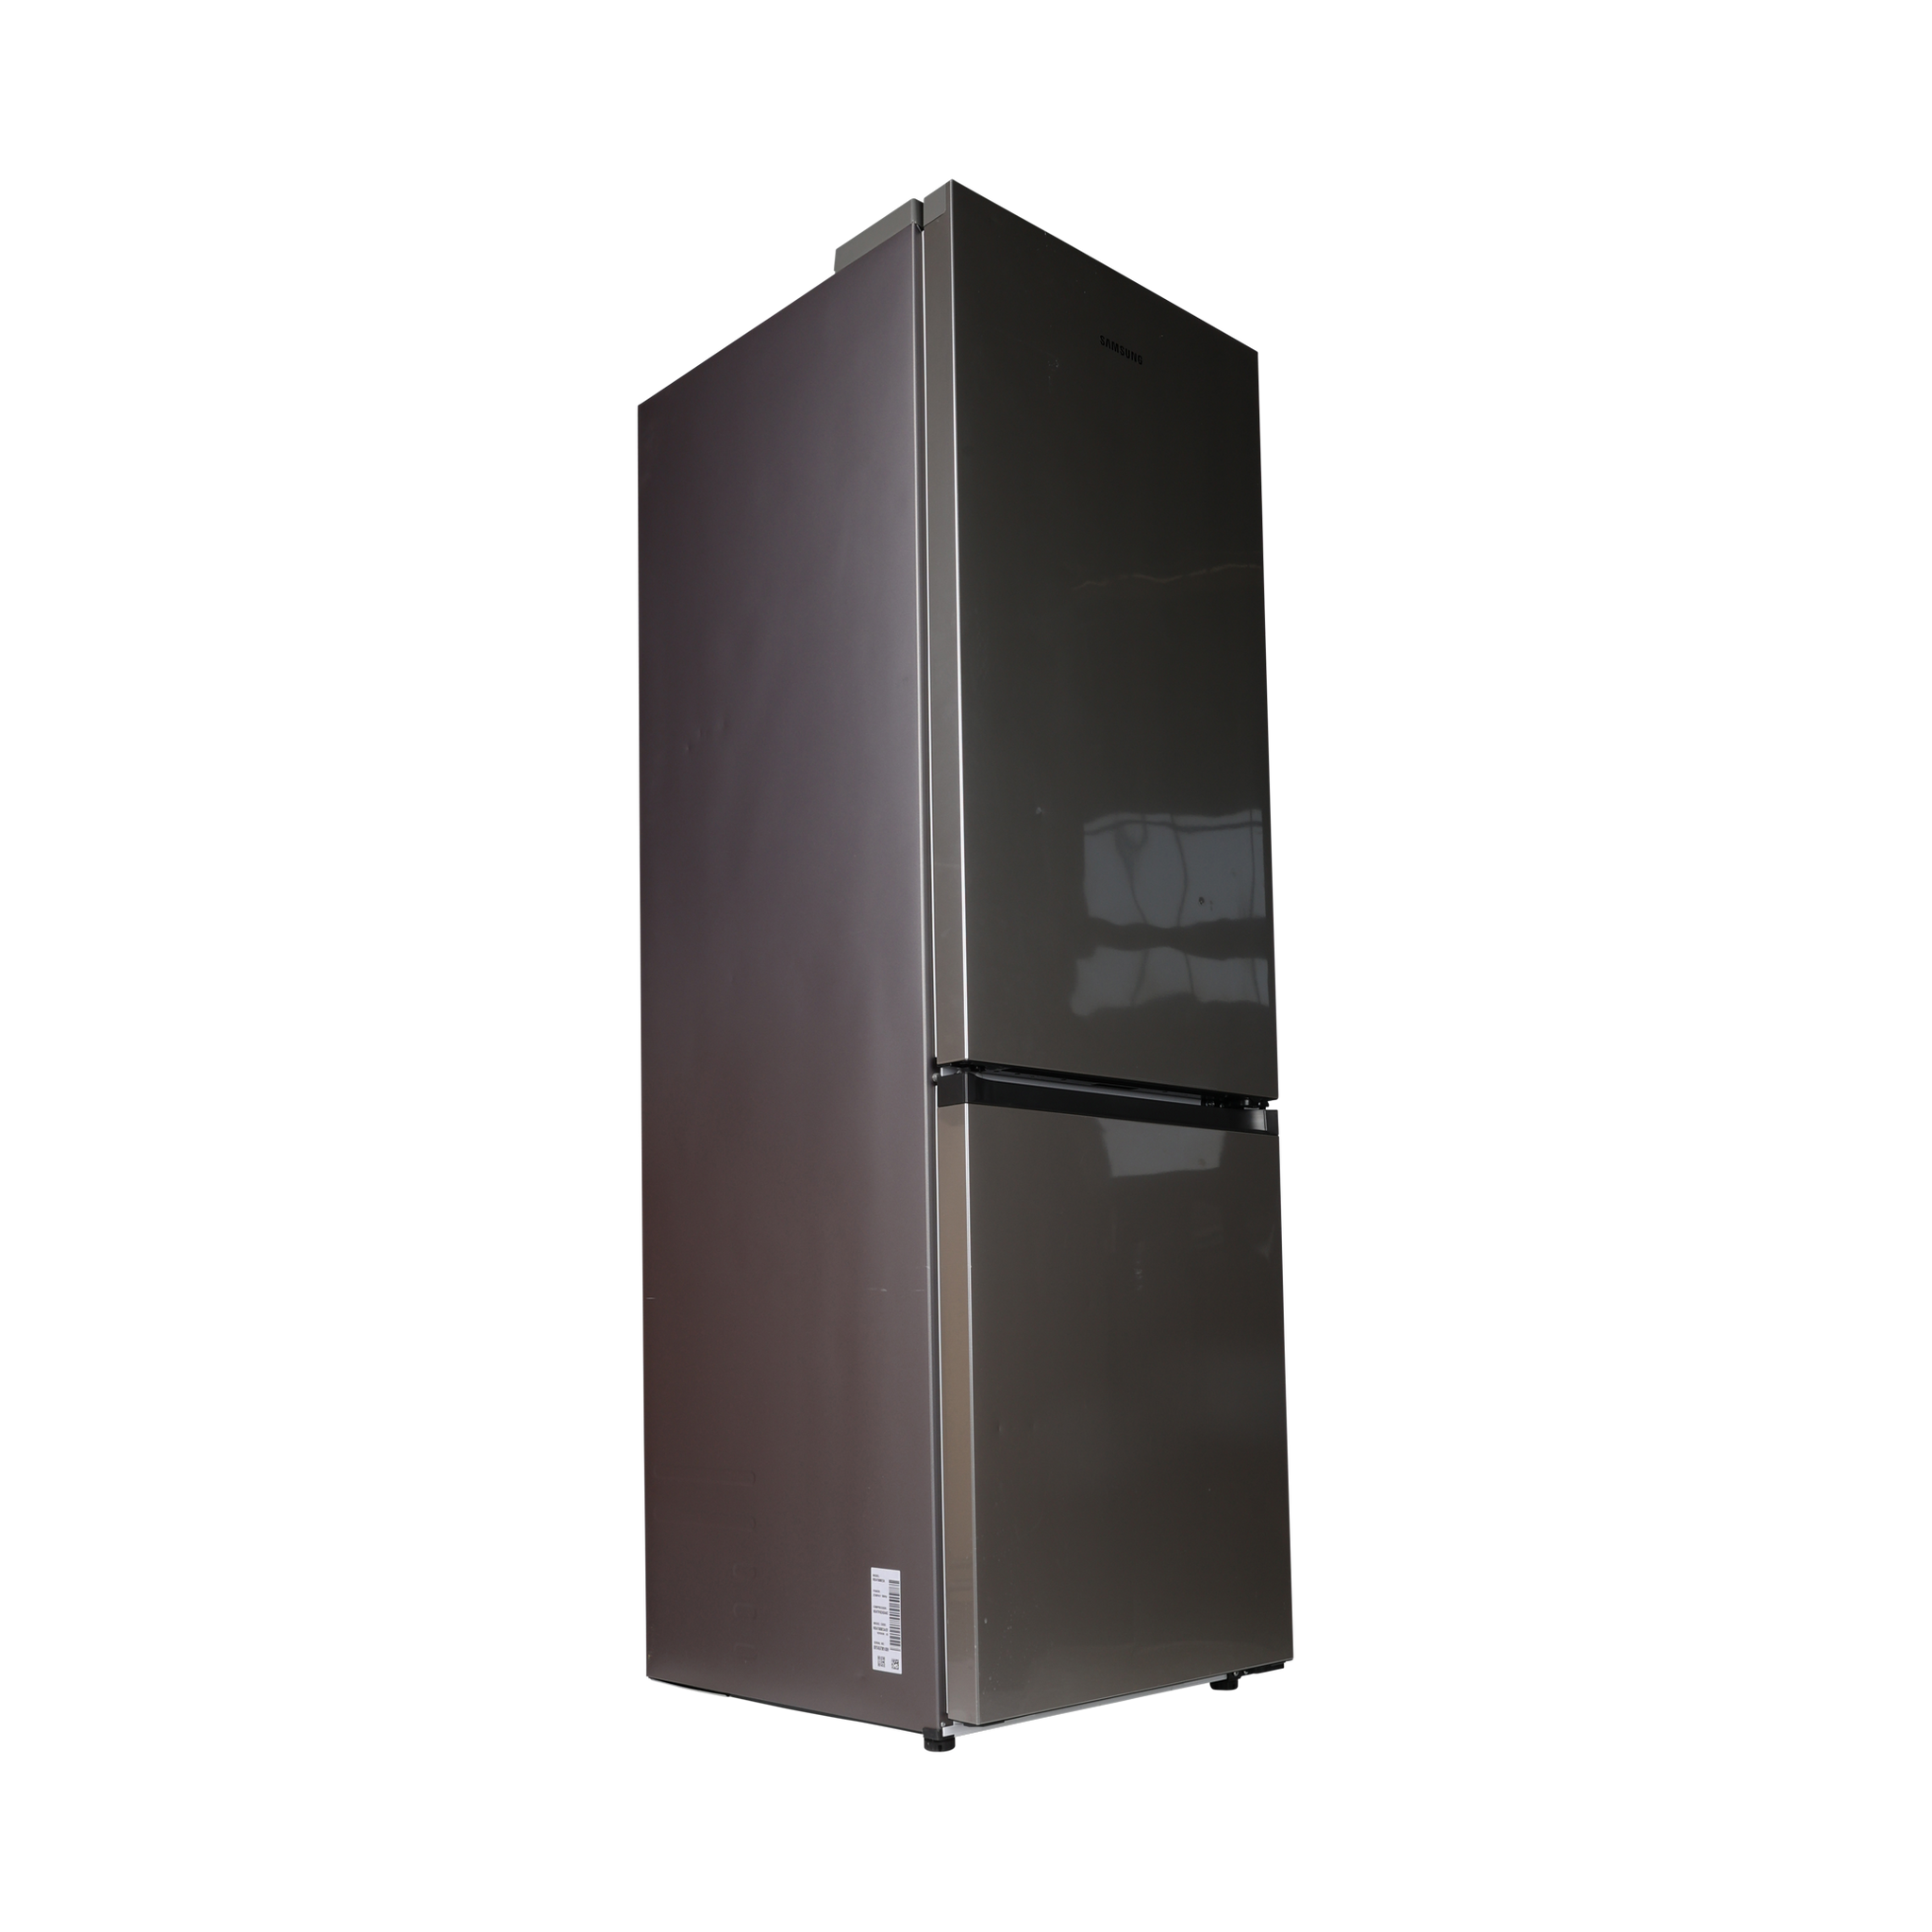 Refrigerateur congelateur en bas Samsung RB34T600ESA